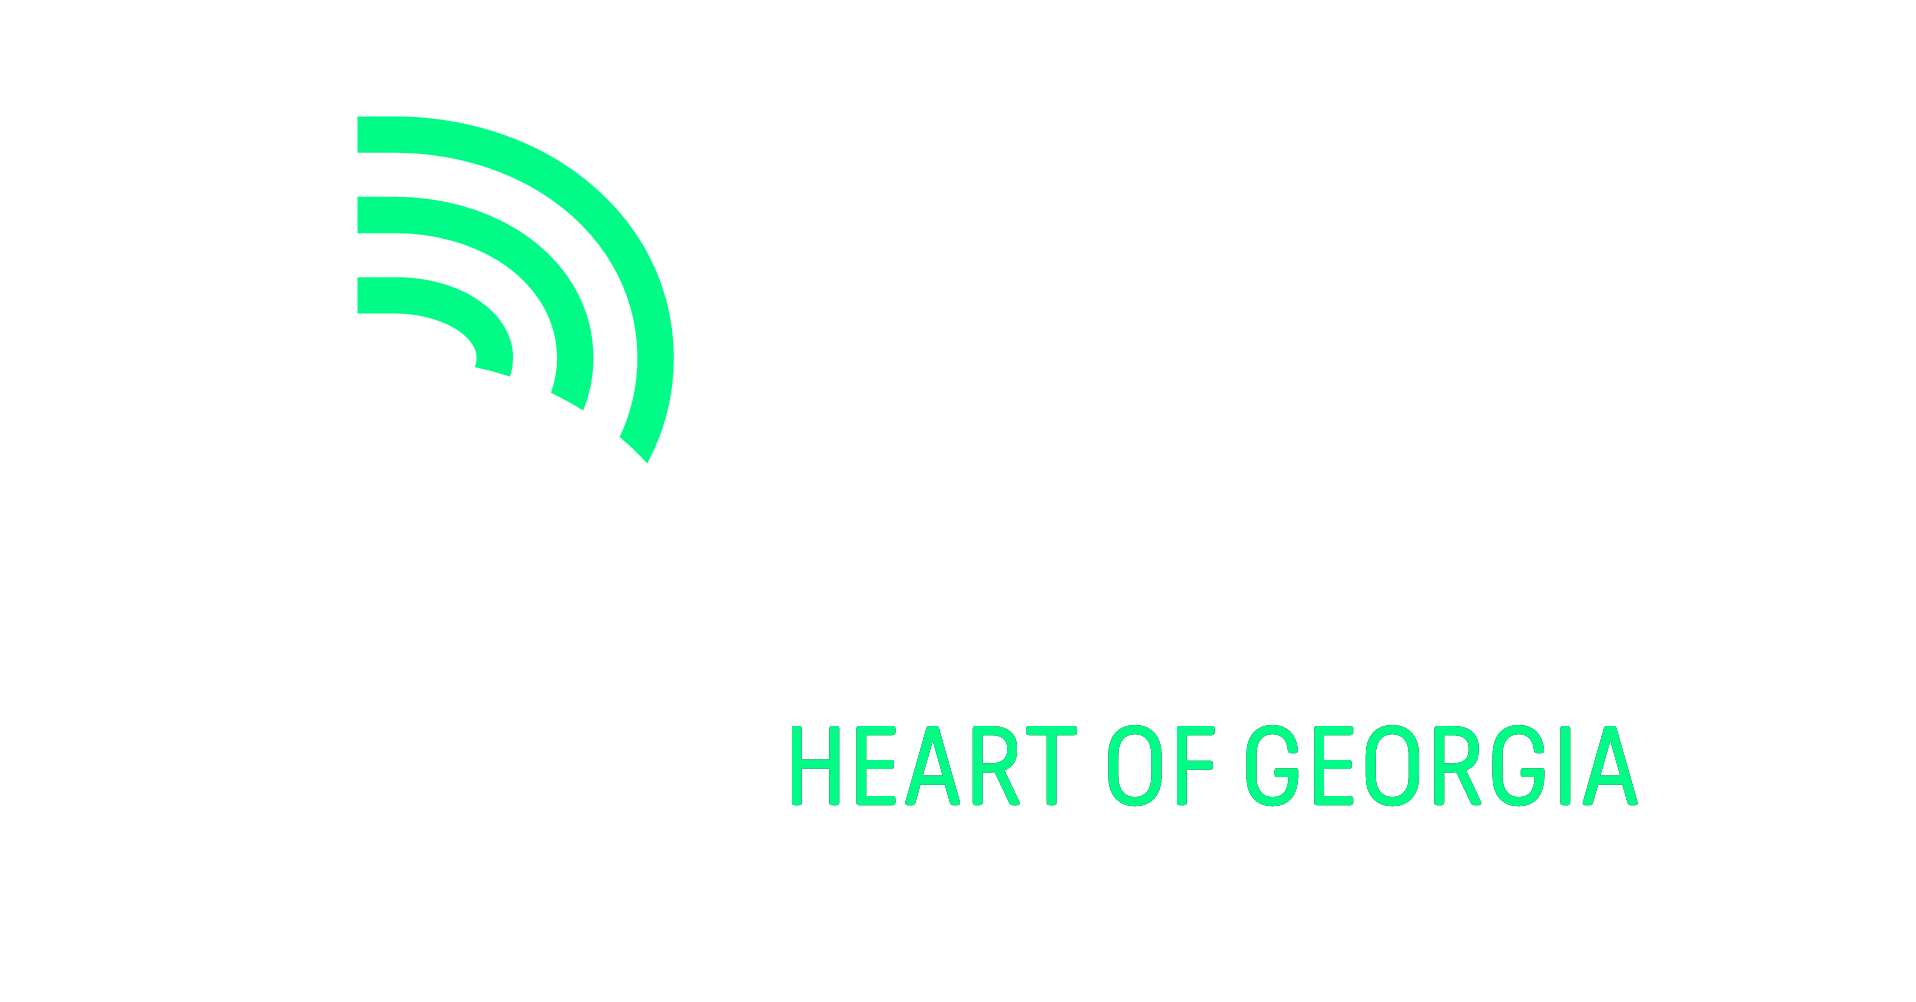 of the Heart of Georgia